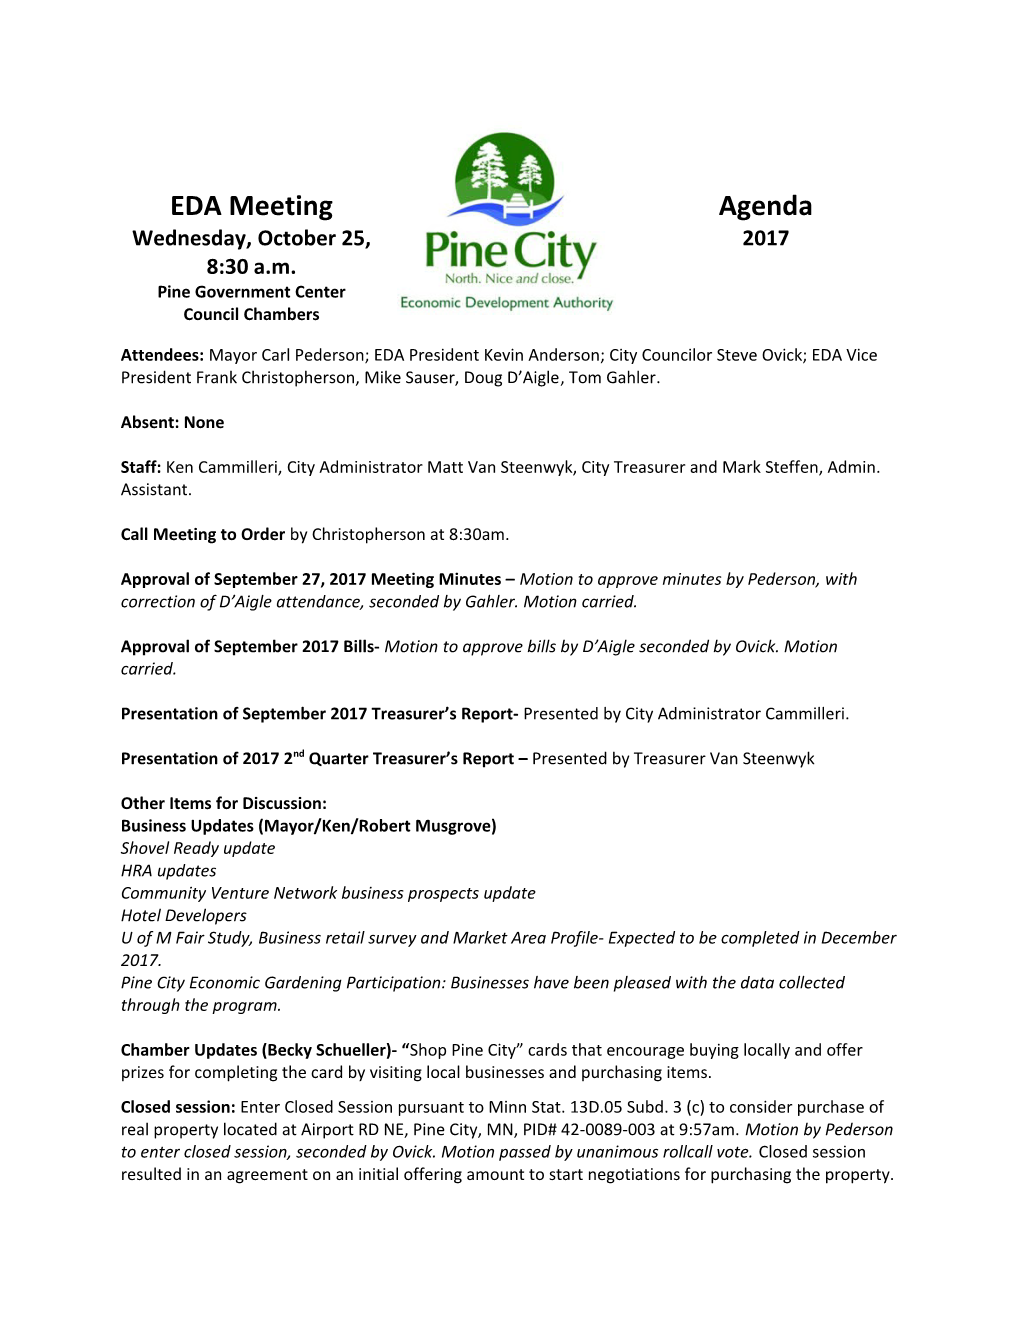 EDA Meeting Agenda